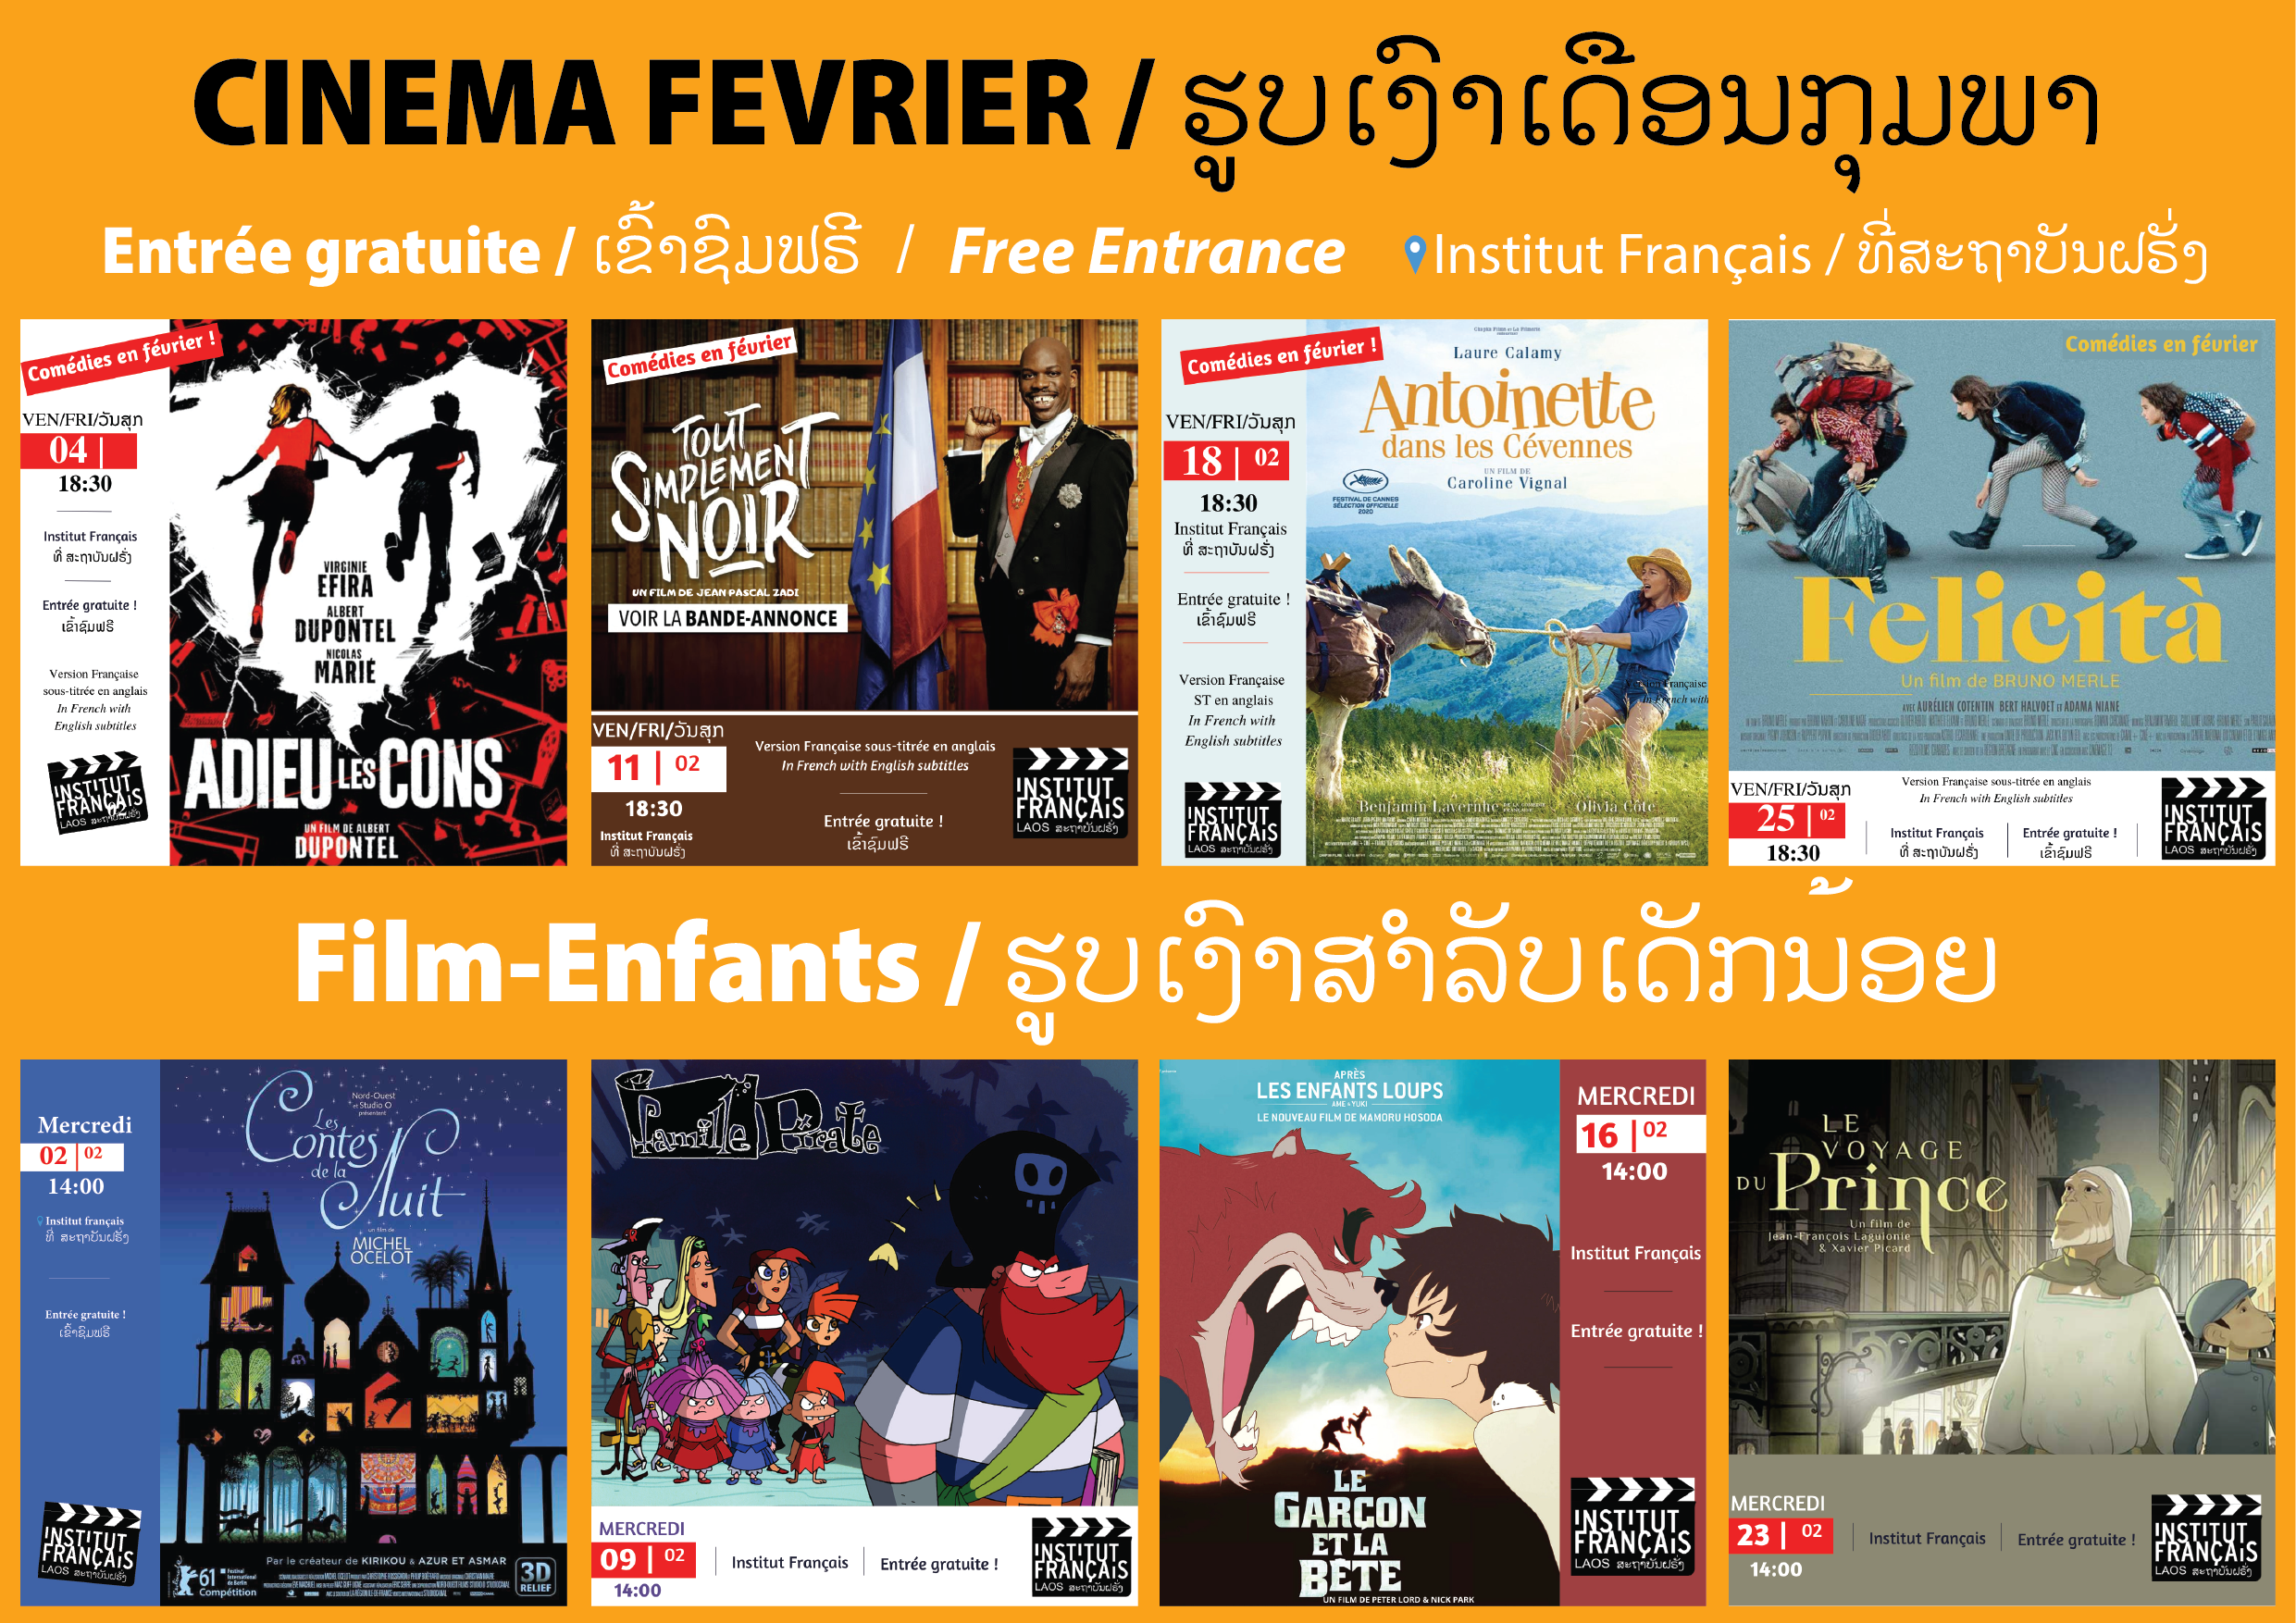 IFLCinema - Film screenings - FEBRUARY